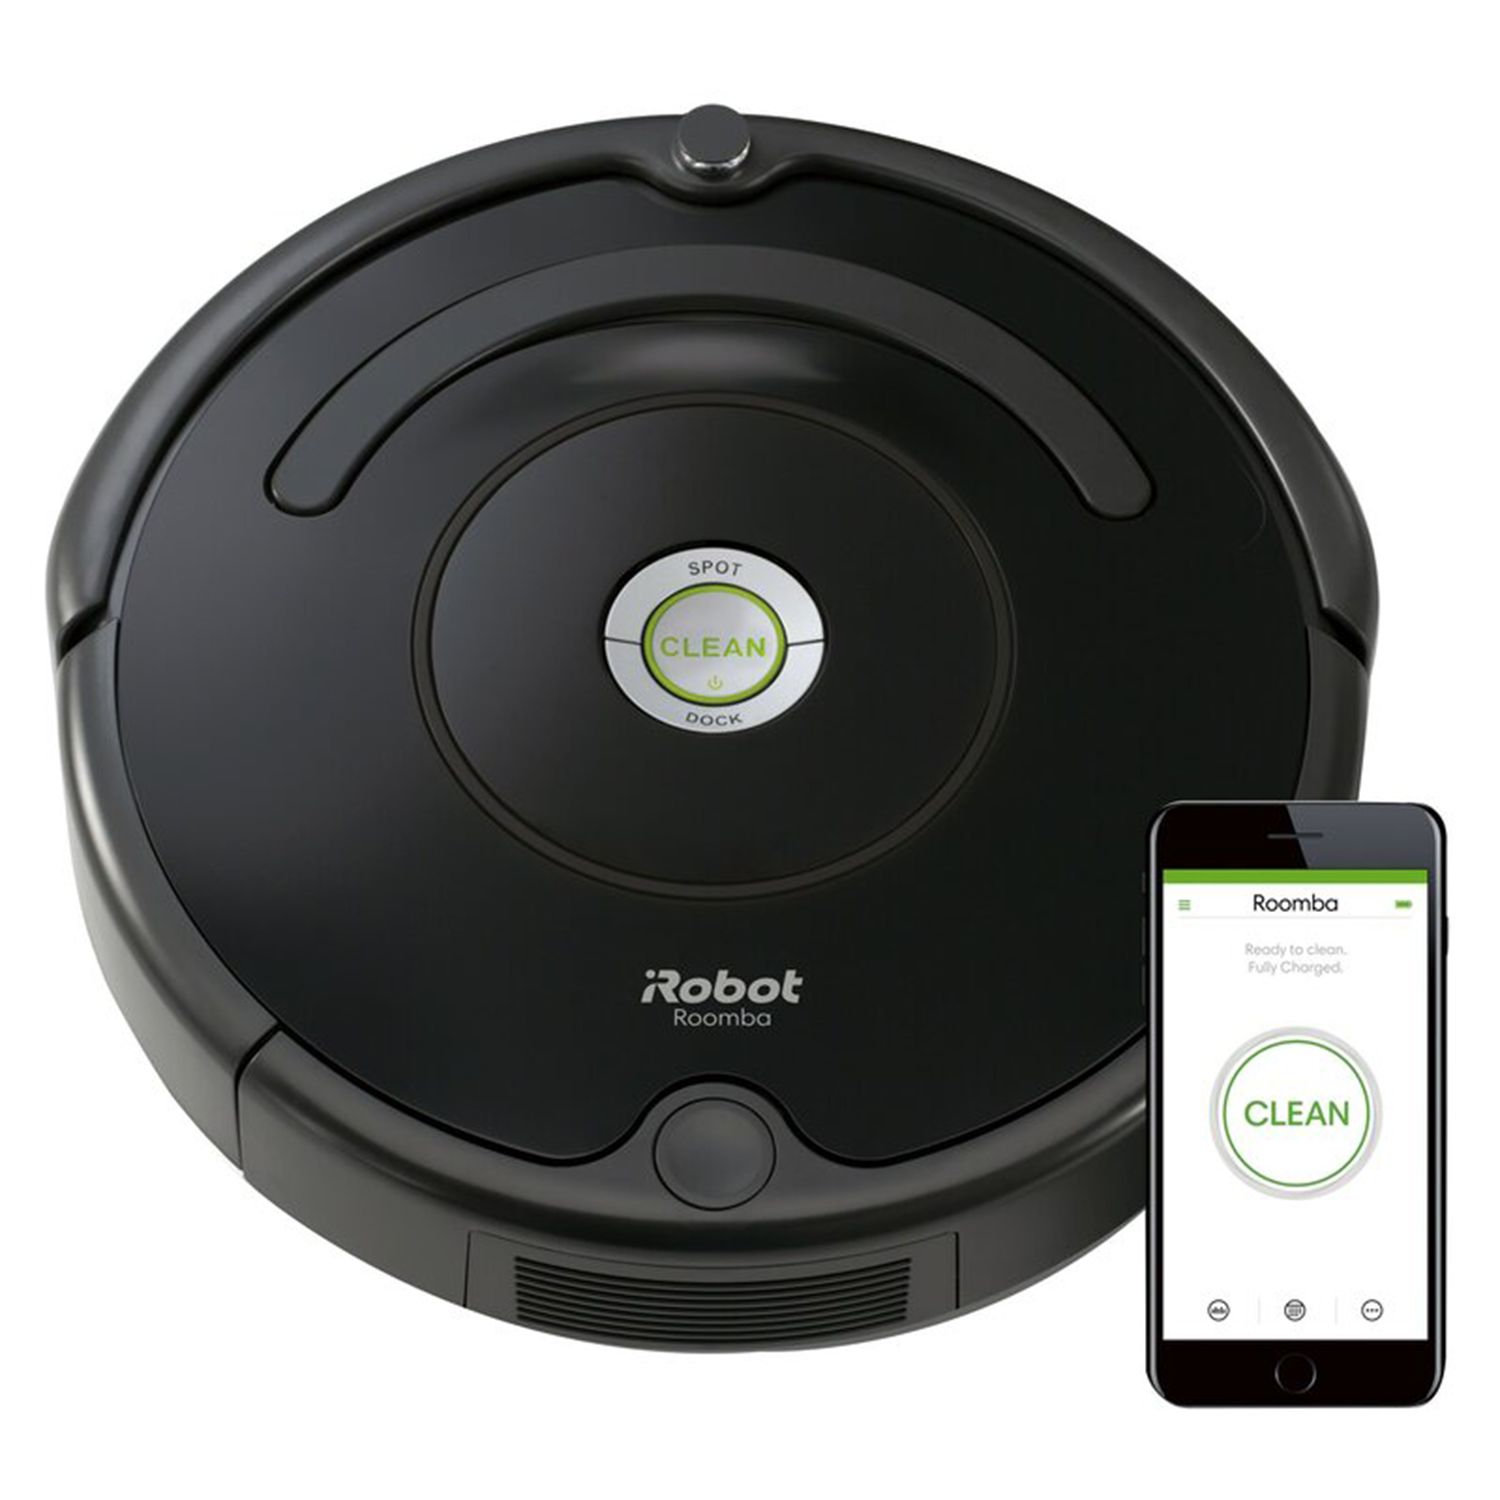 Robot aspirateur iRobot Roomba 675 connecté au Wi-Fi